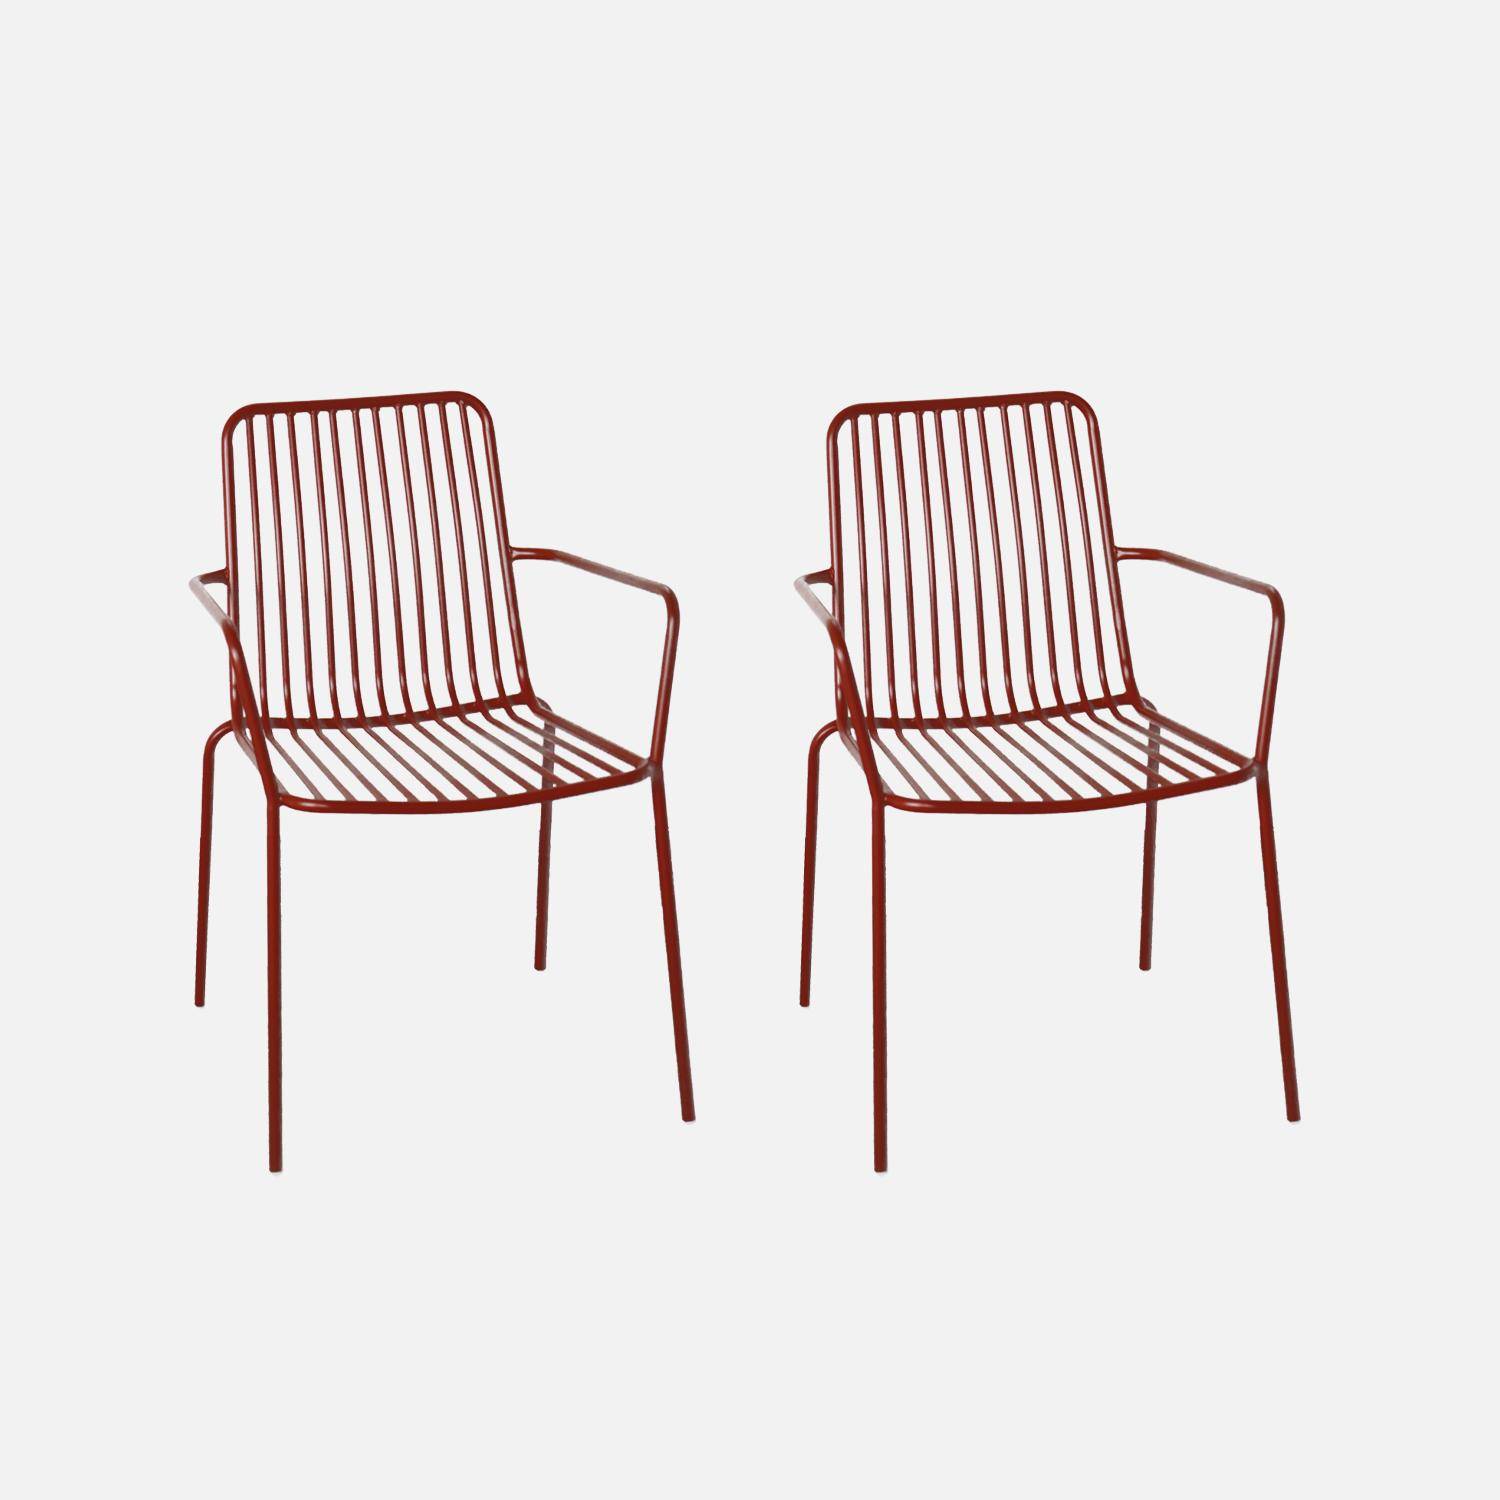 2er Set stapelbare terrakottafarbene Stühle aus Stahl, mit Armlehnen - Florida,sweeek,Photo4